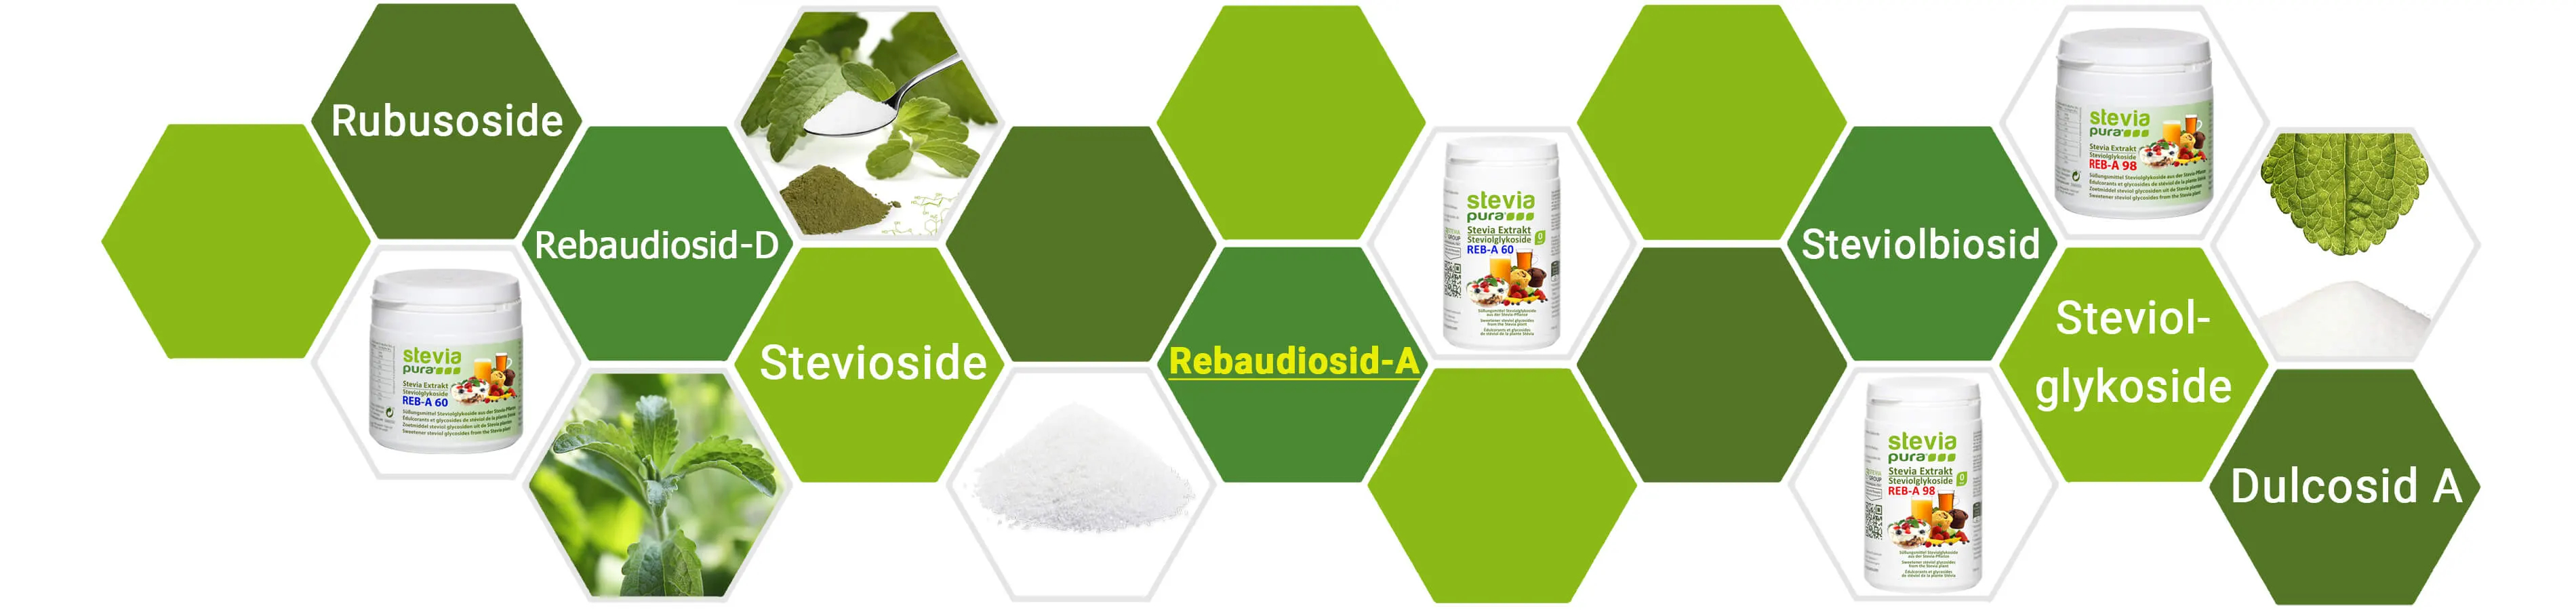 What is Rebaudioside-A? | The sugar substitute Stevia